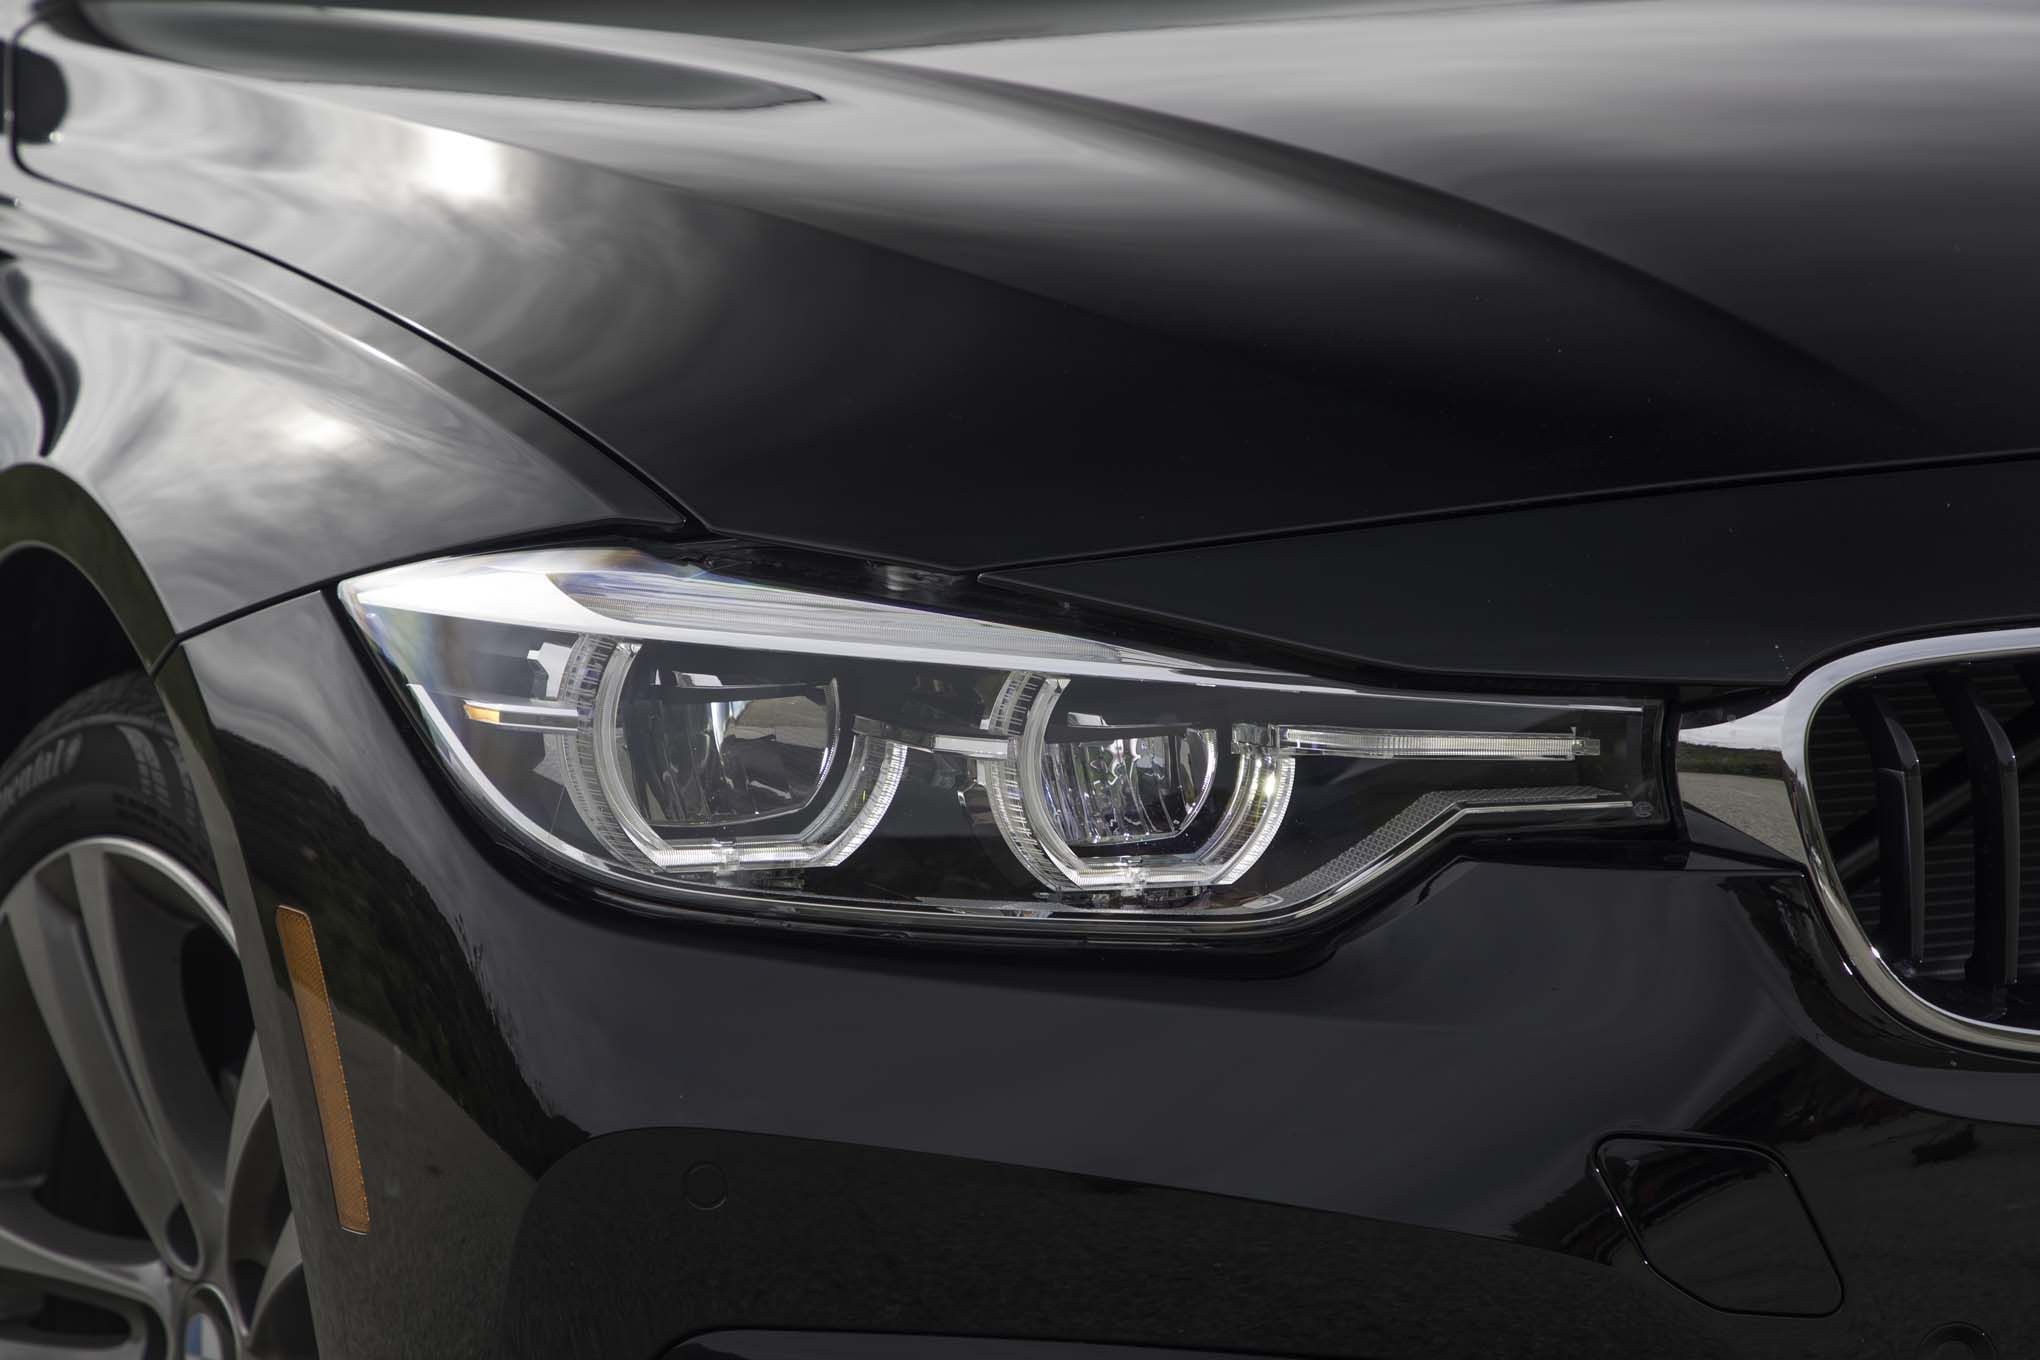 2017 BMW 330i Sedan Exterior View Headlight (View 41 of 59)